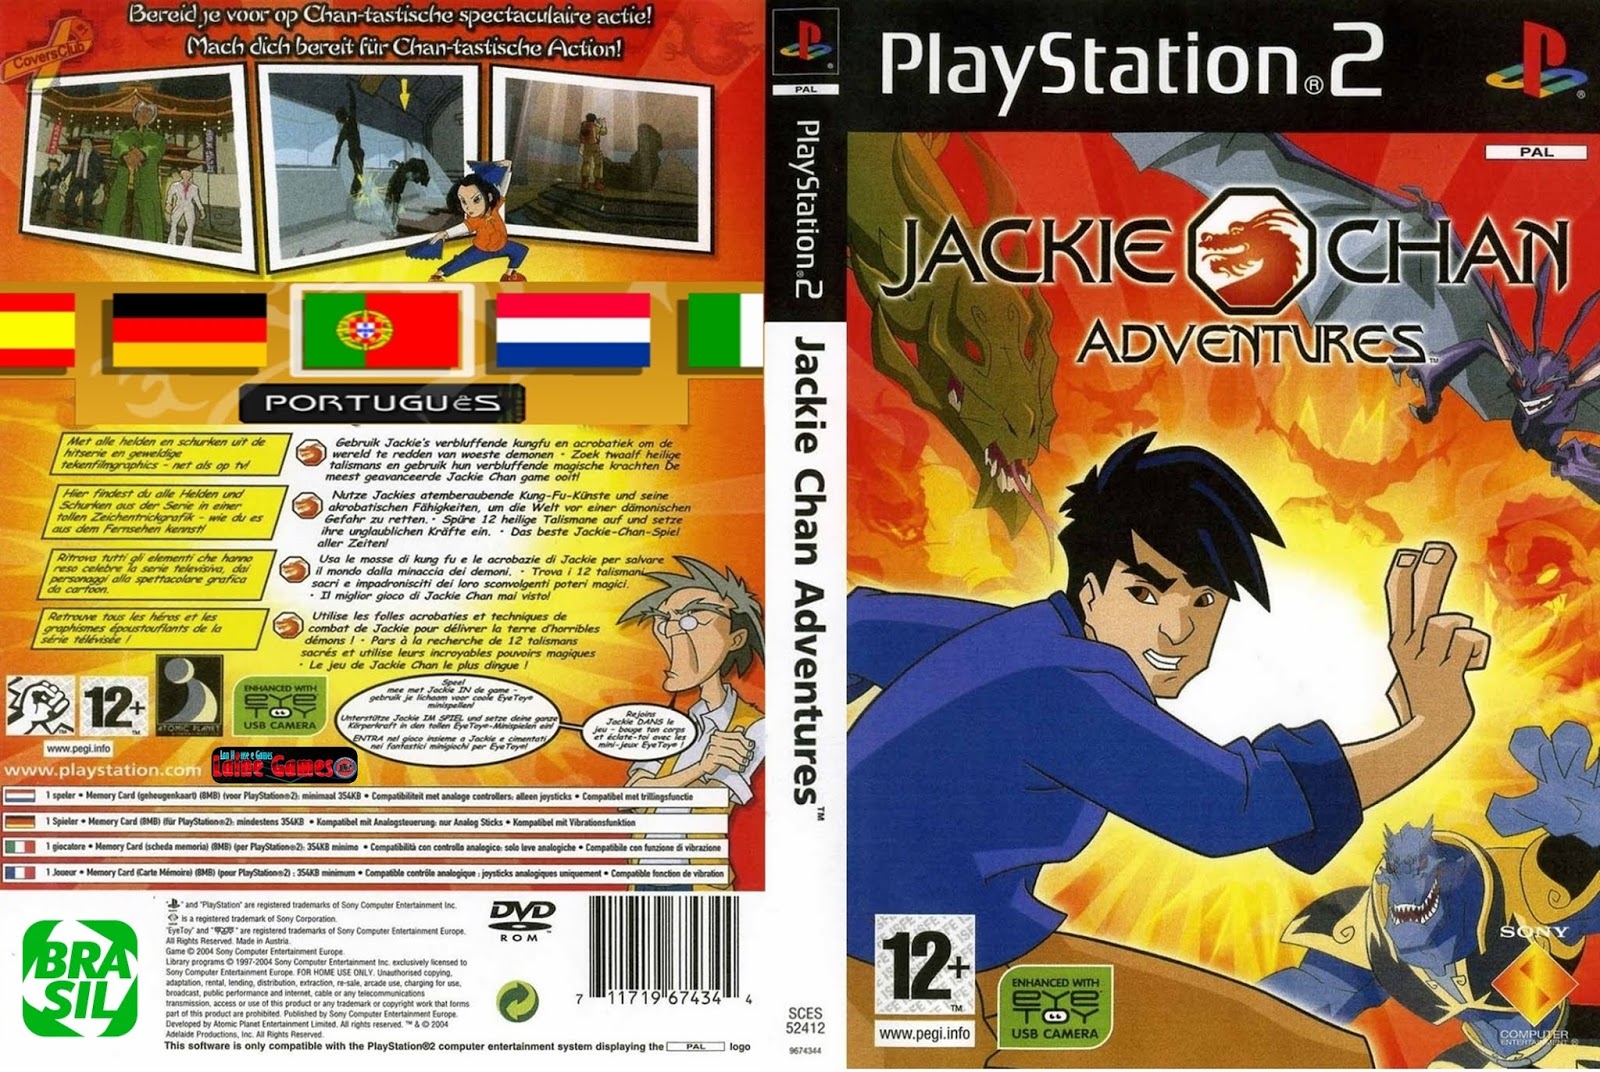 Джеки чан приключения 2. Игра Джеки Чан на ПС 2. Джеки Чан игра на ps2. Джеки Чан Адвентурес ps2. Джеки Чан Adventures игра.